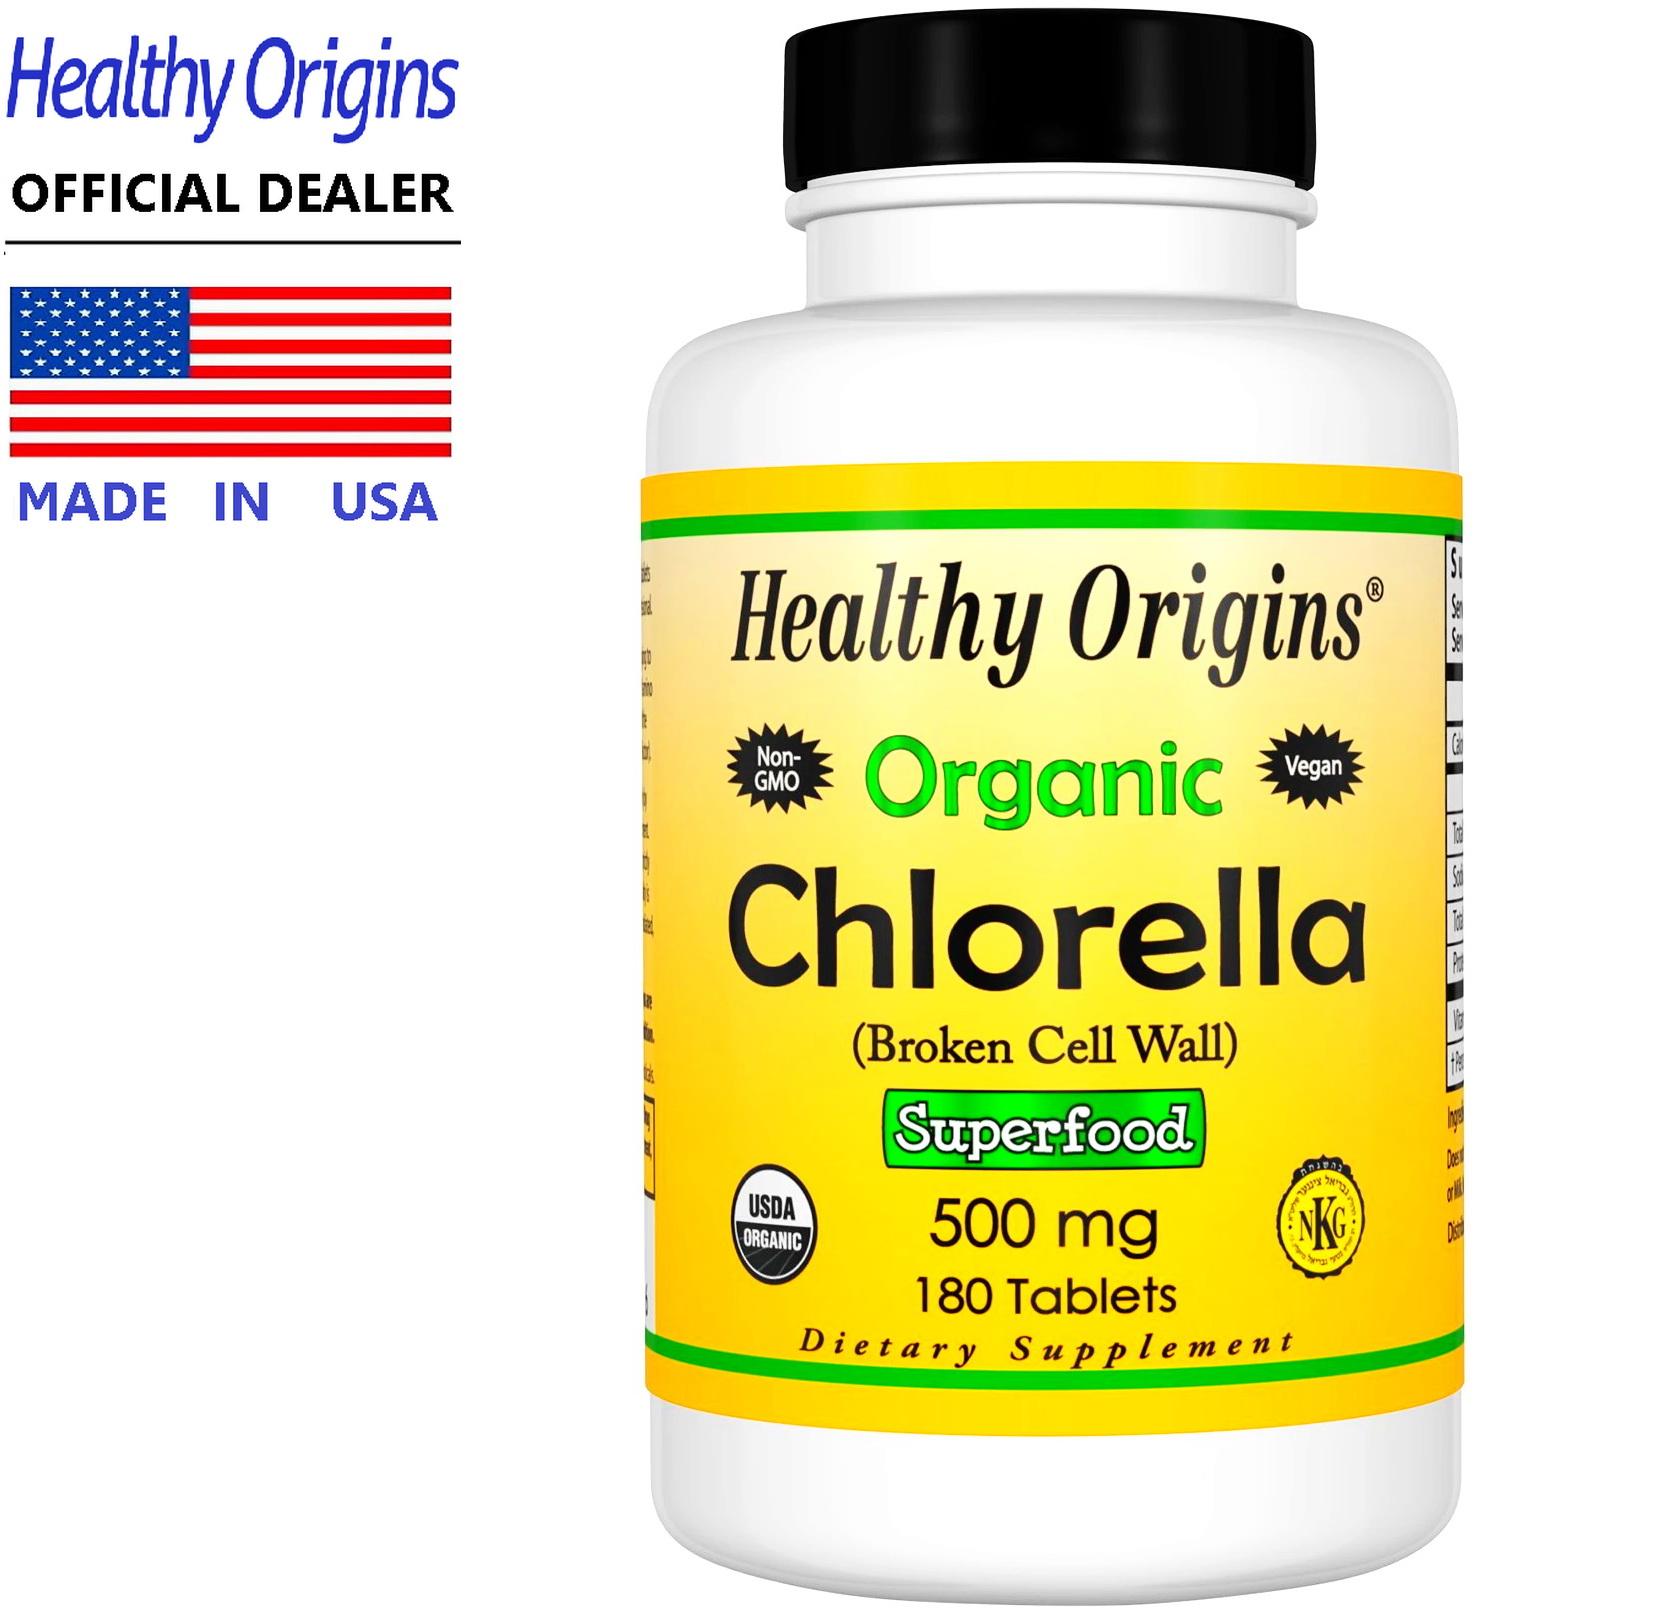 Healthy Origins Chlorella 500 mg x 180 เม็ด เฮลท์ตี้ ออริจินส์ สาหร่ายคลอเรลลา ปราศจากสารพิษ ออร์แกนิค สาหร่ายสีเขียว โปรตีน/คลอโรฟีลล์สูง